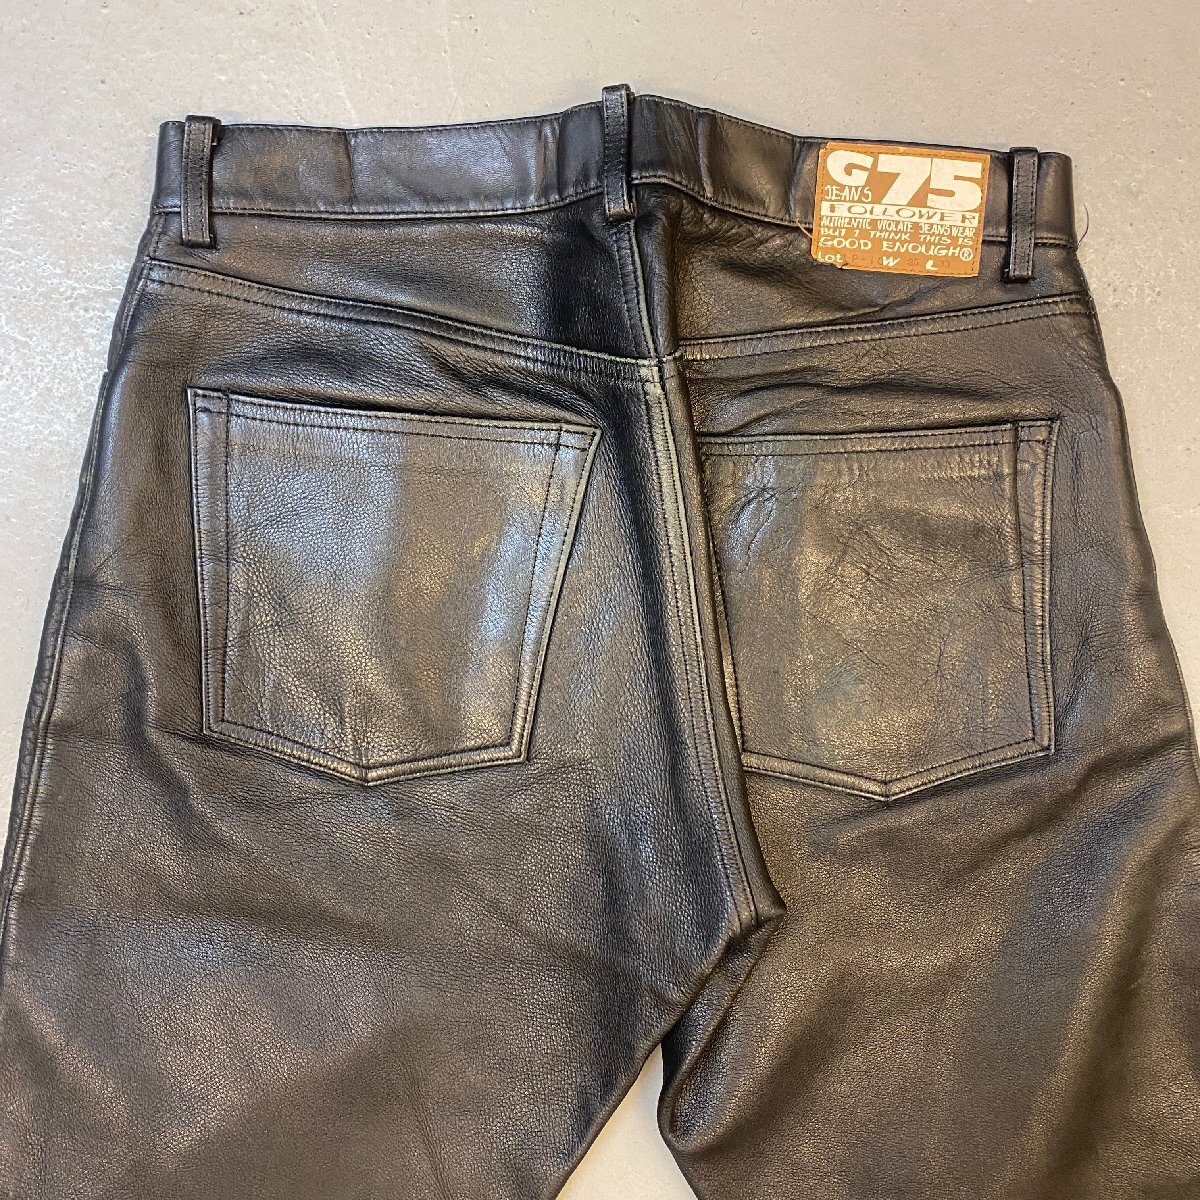 ☆GOOD ENOUGH グッドイナフ☆アーカイブ メンズ レザーパンツ G75 JEANS Archives Men's Leather Pants_画像6